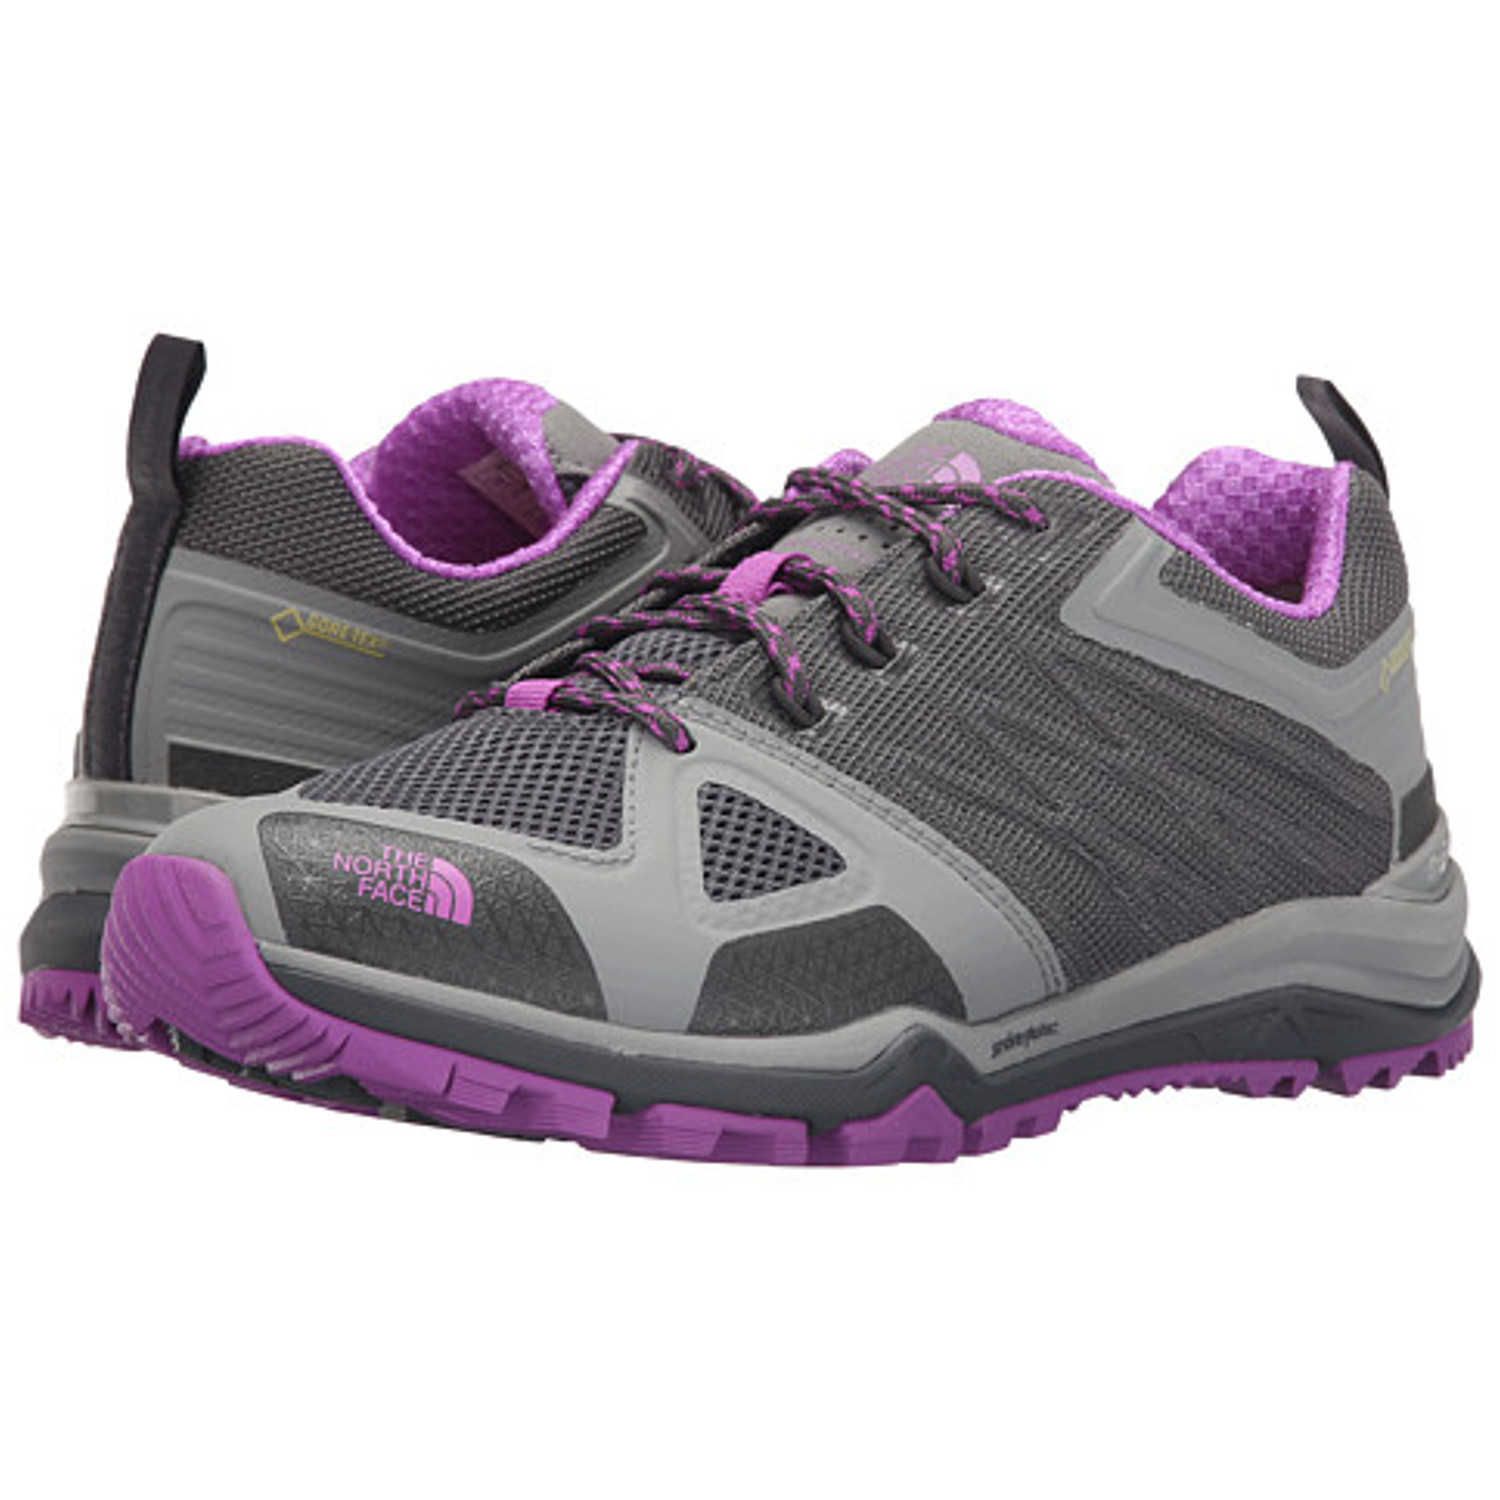 Chaussures Trail Ultra Cardiac Women - Violet/Gris